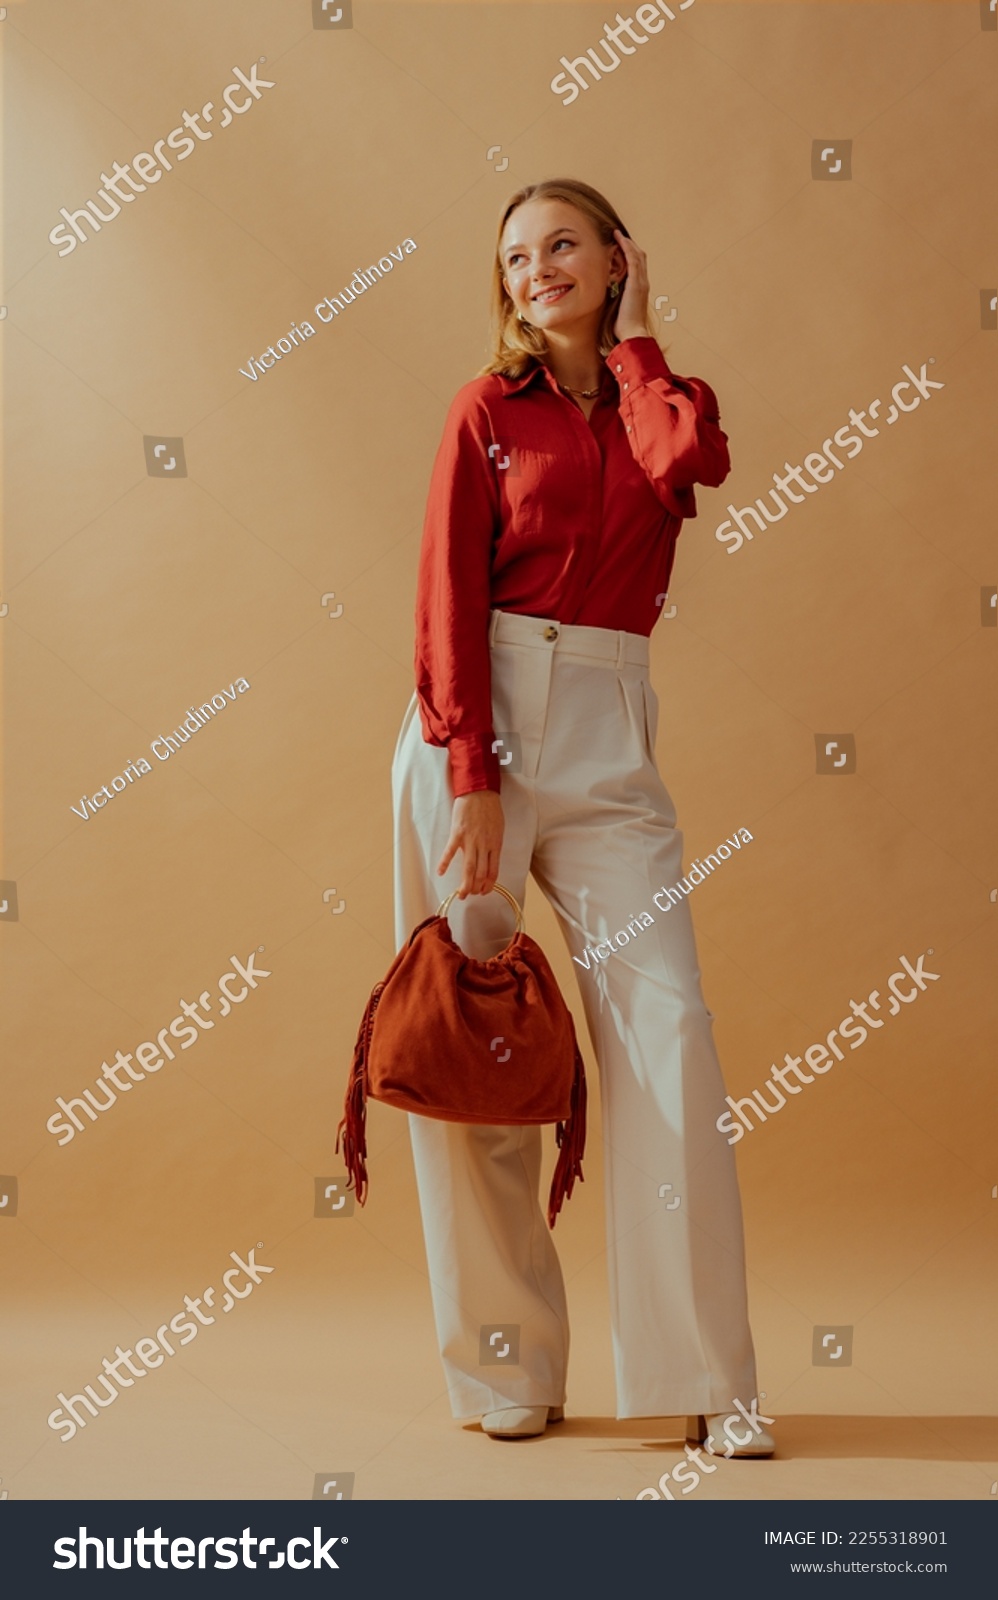 Happy smiling fashionable woman wearing elegant satin blouse, white wide leg trousers, holding trendy suede fringed bag, posing on beige background. Full-length studio fashion portrait #2255318901